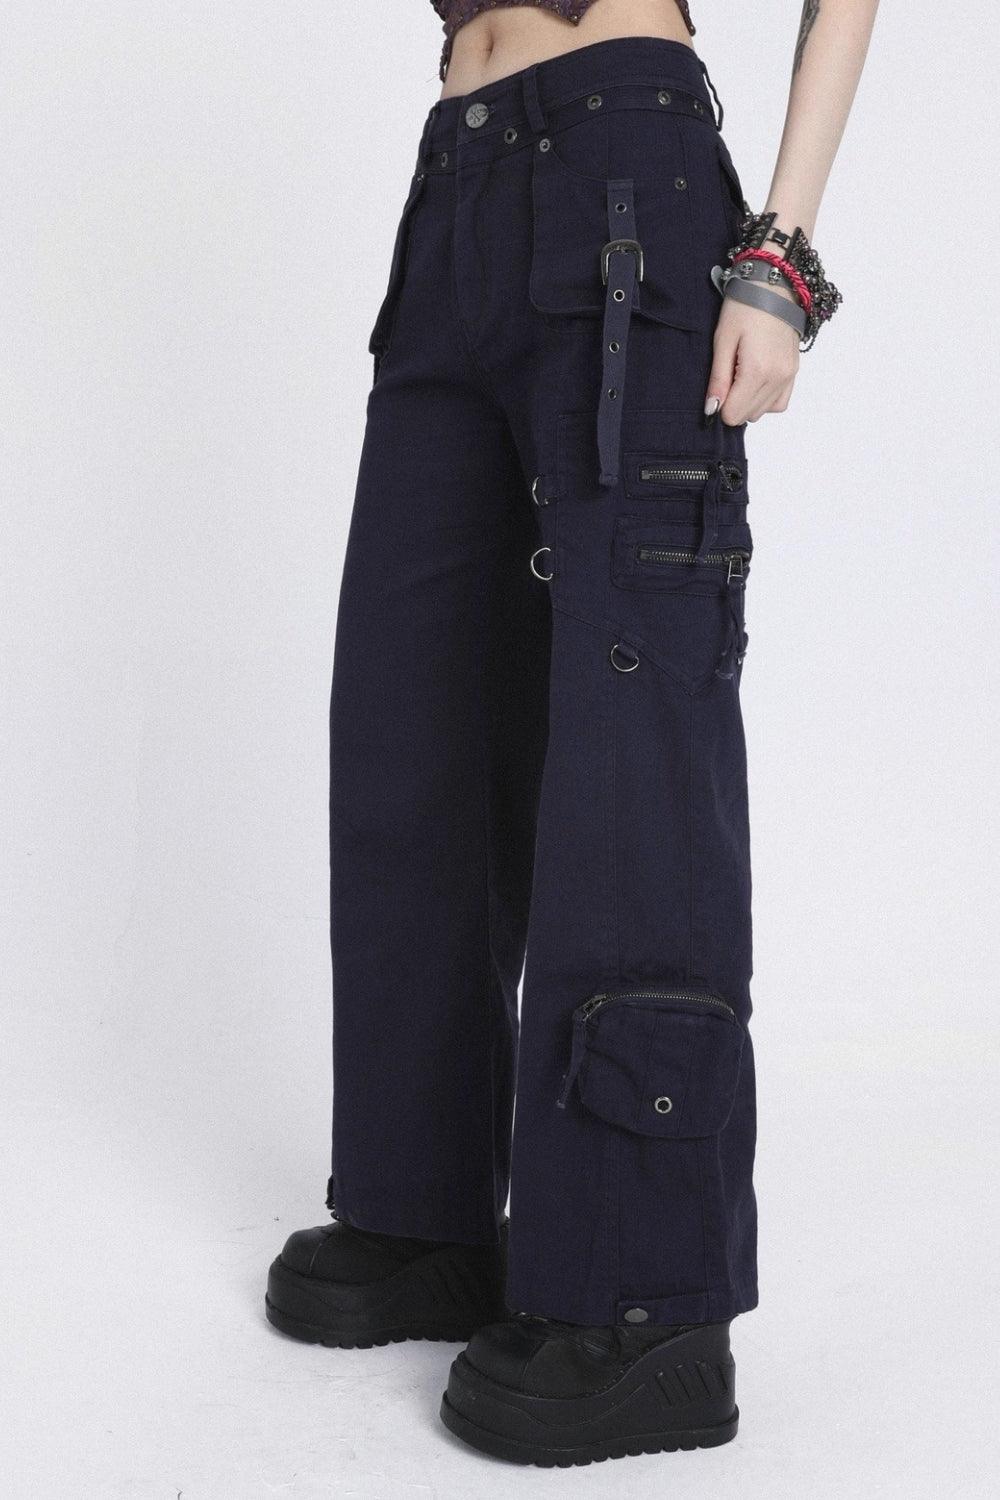 Multi-Pocket Cargo Pants - Pixie Rebels